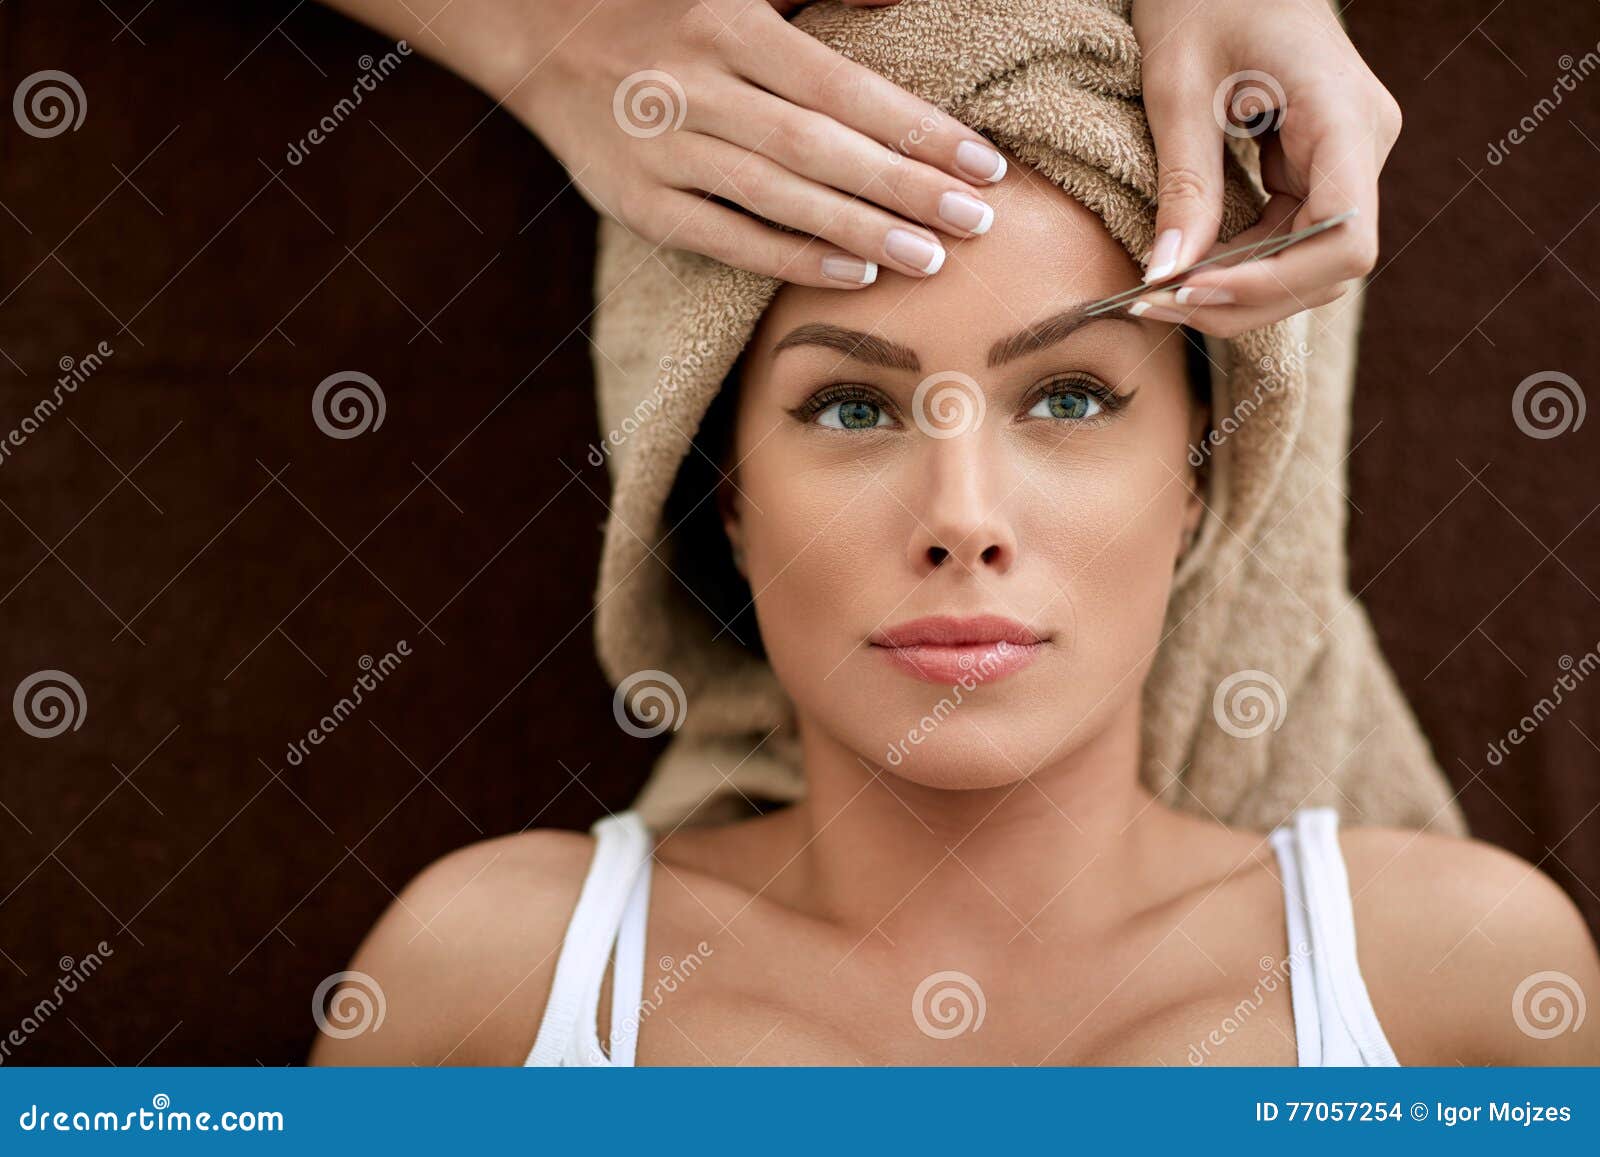 Professional Eyebrow Shaping Stock Photo Image of metal salon 77057254